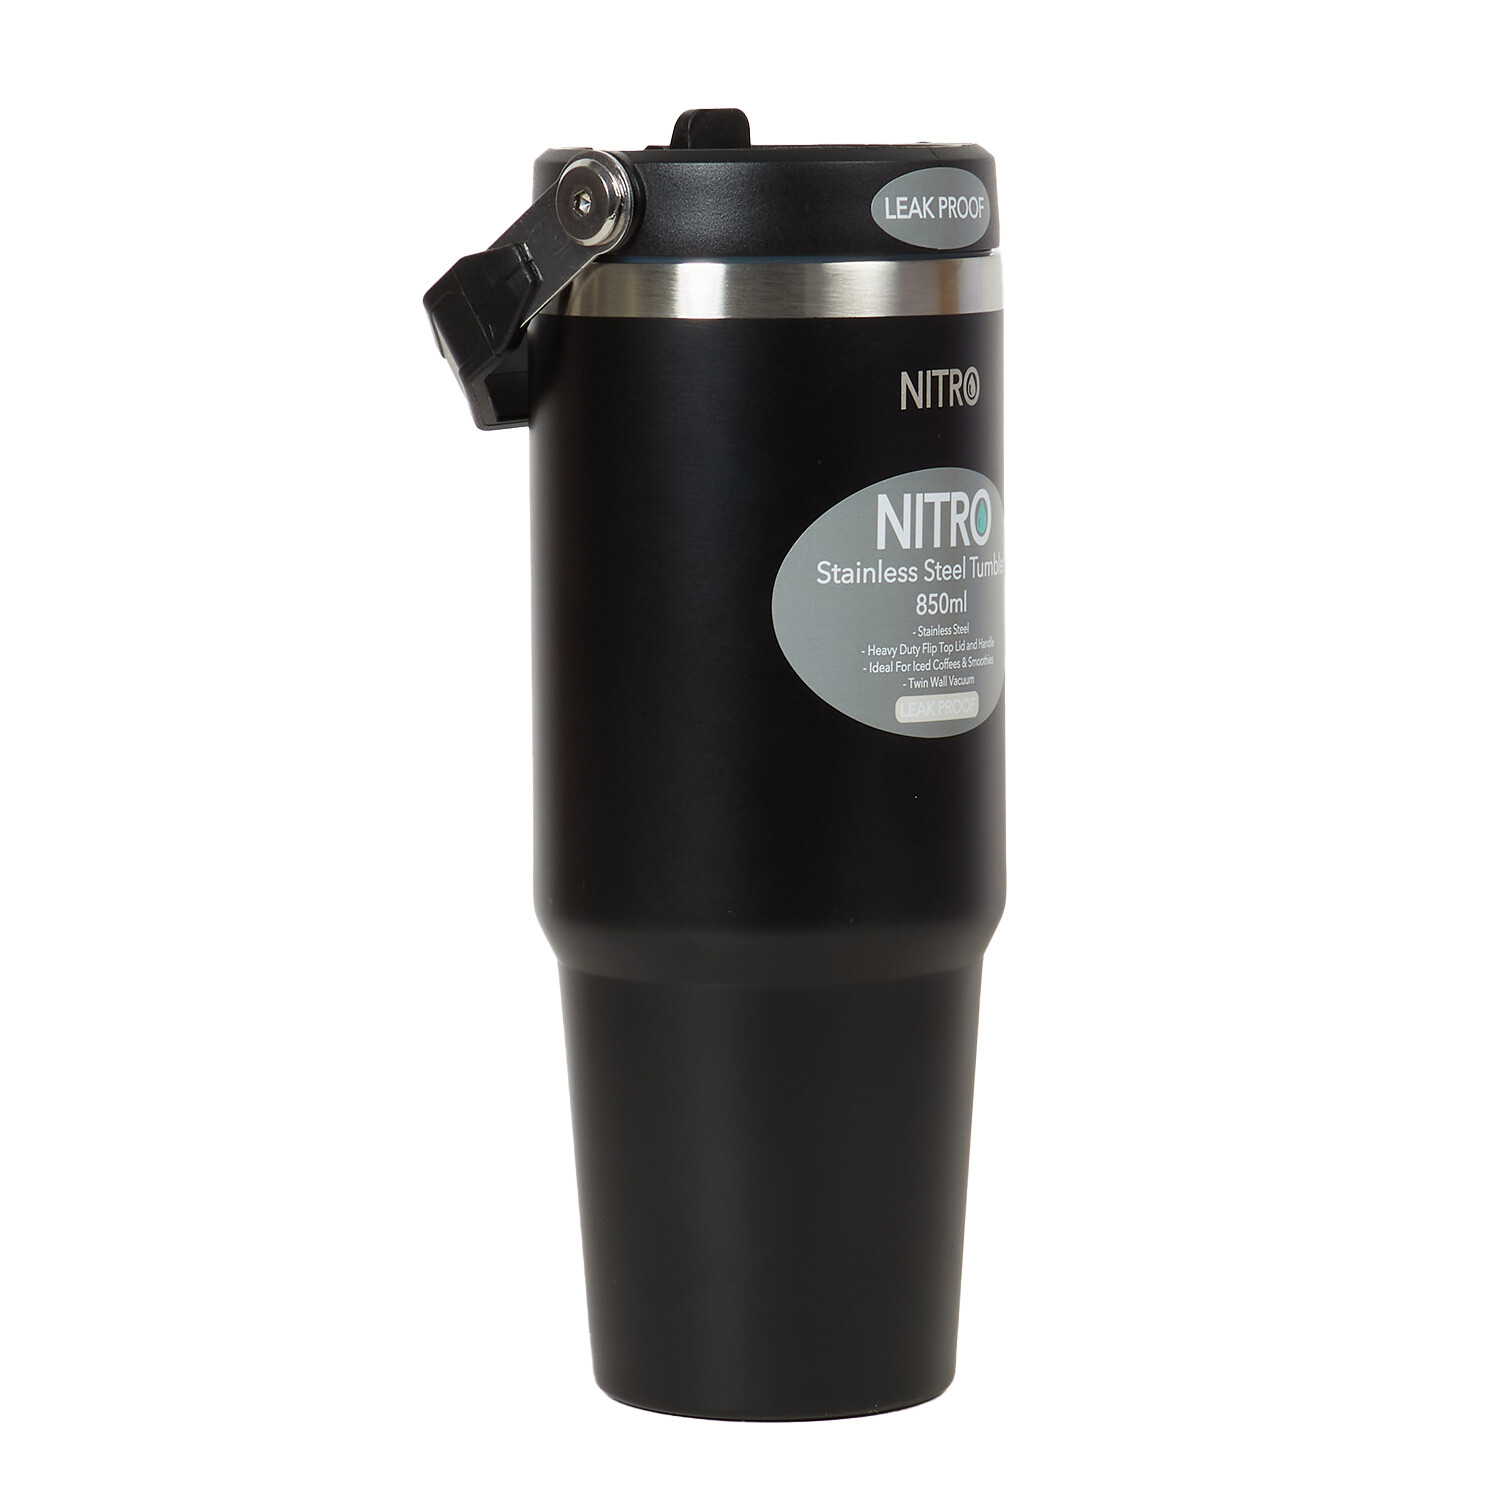 Nitro Stainless Steel Tumbler 850ml - Black Image 3